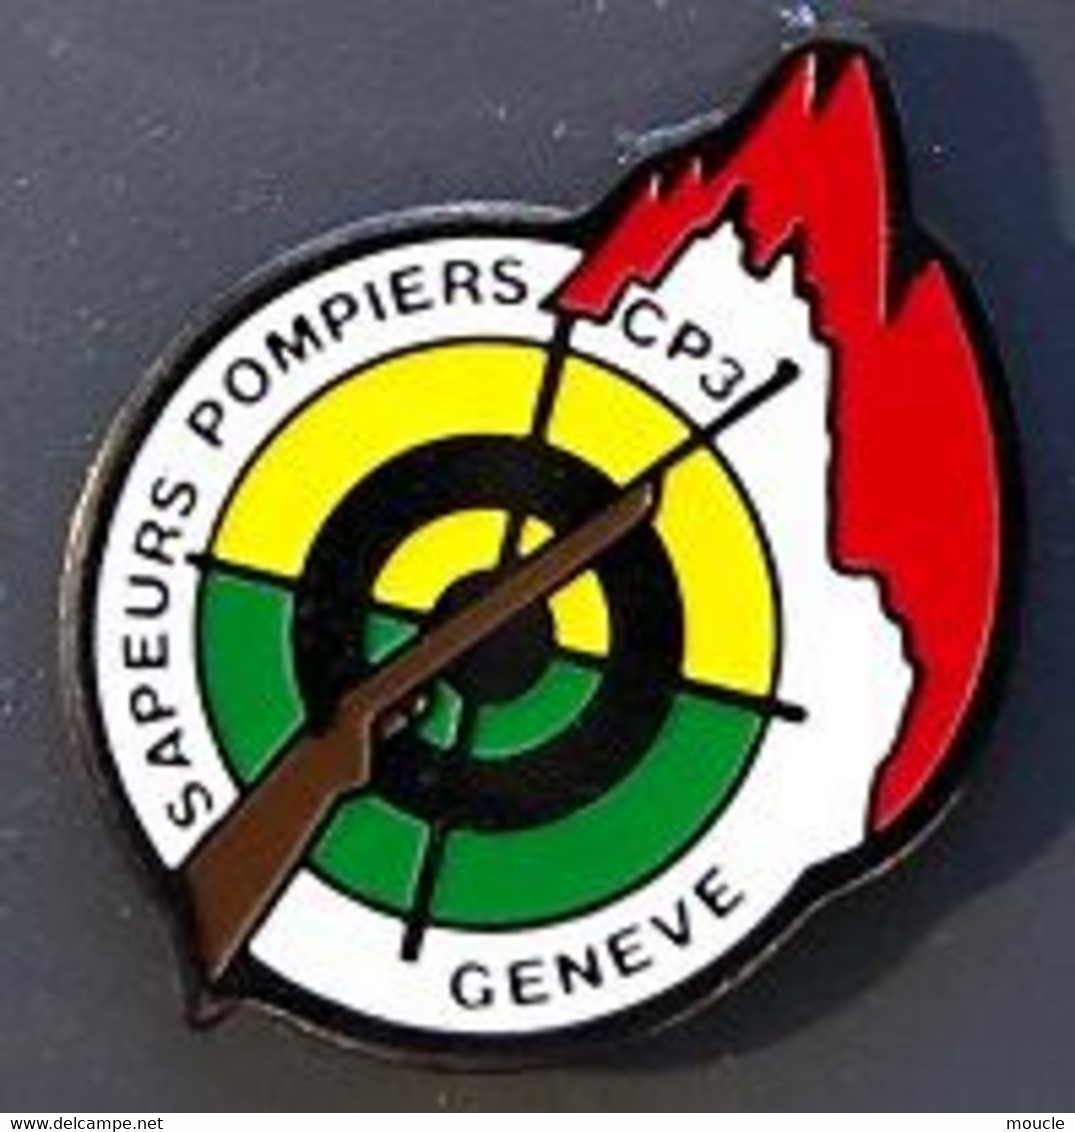 SAPEURS POMPIERS GENEVE CP3 - COMPAGNIE 3 - FUSIL - CIBLE - GENFER FEUERWEHTMANN - FIREFIGHTER GENEVA - POMPIERE -  (25) - Pompiers